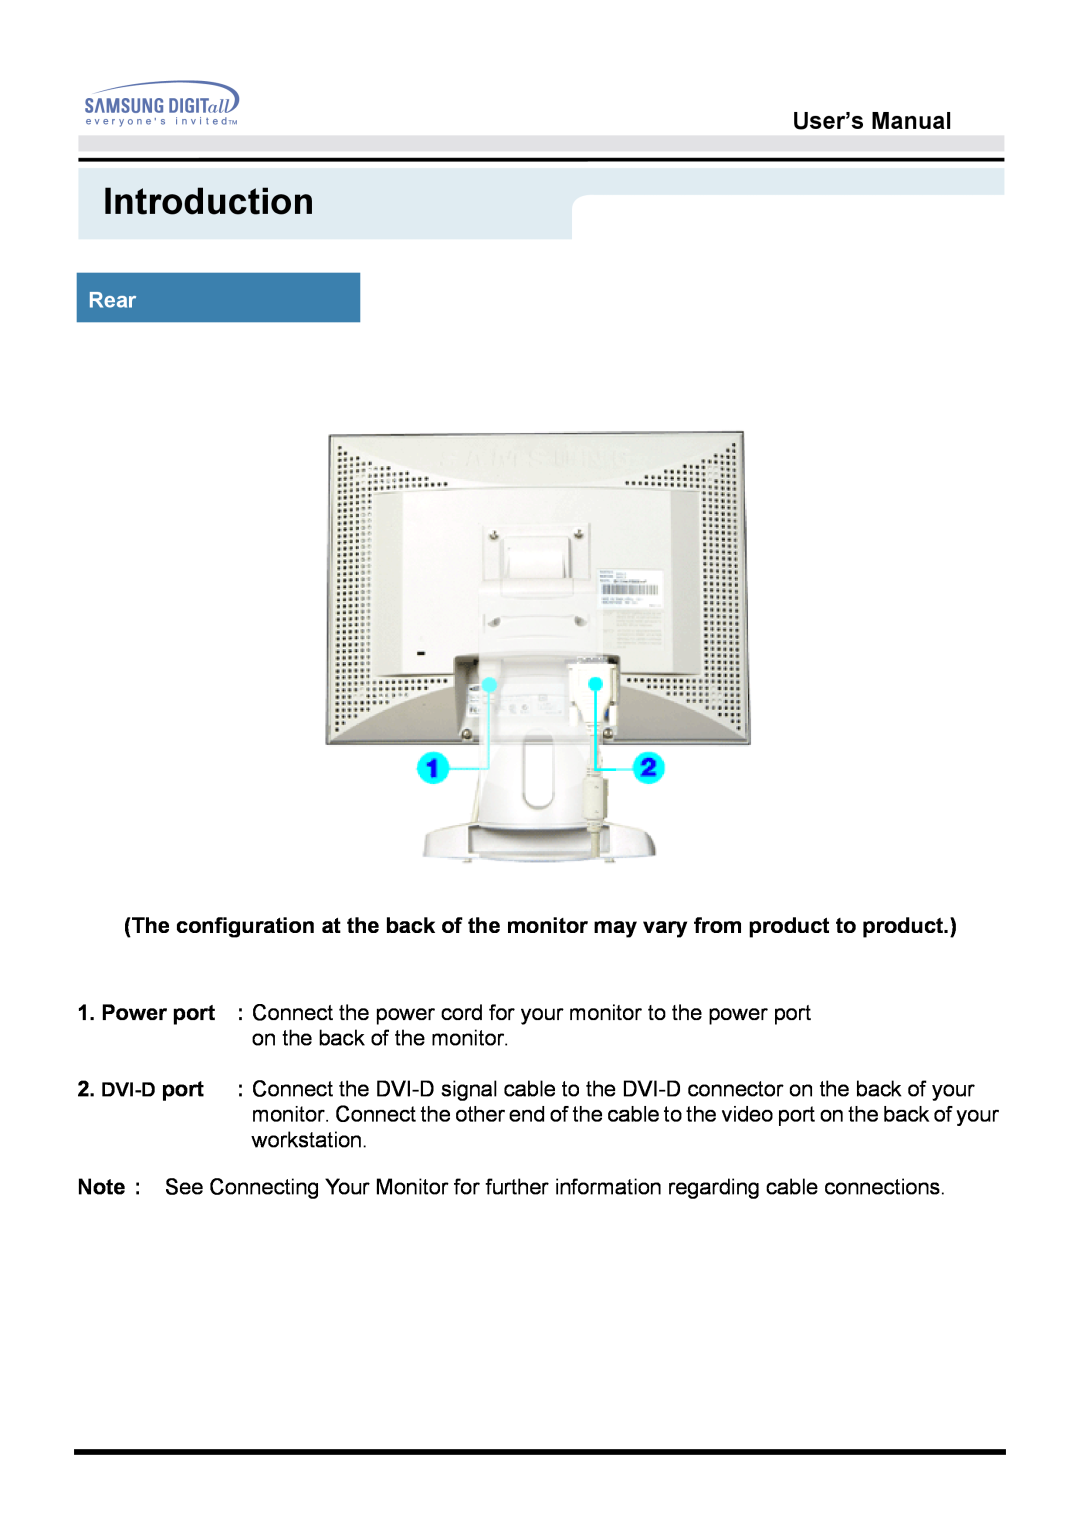 Samsung 151D user manual Rear, Introduction, User’s Manual 